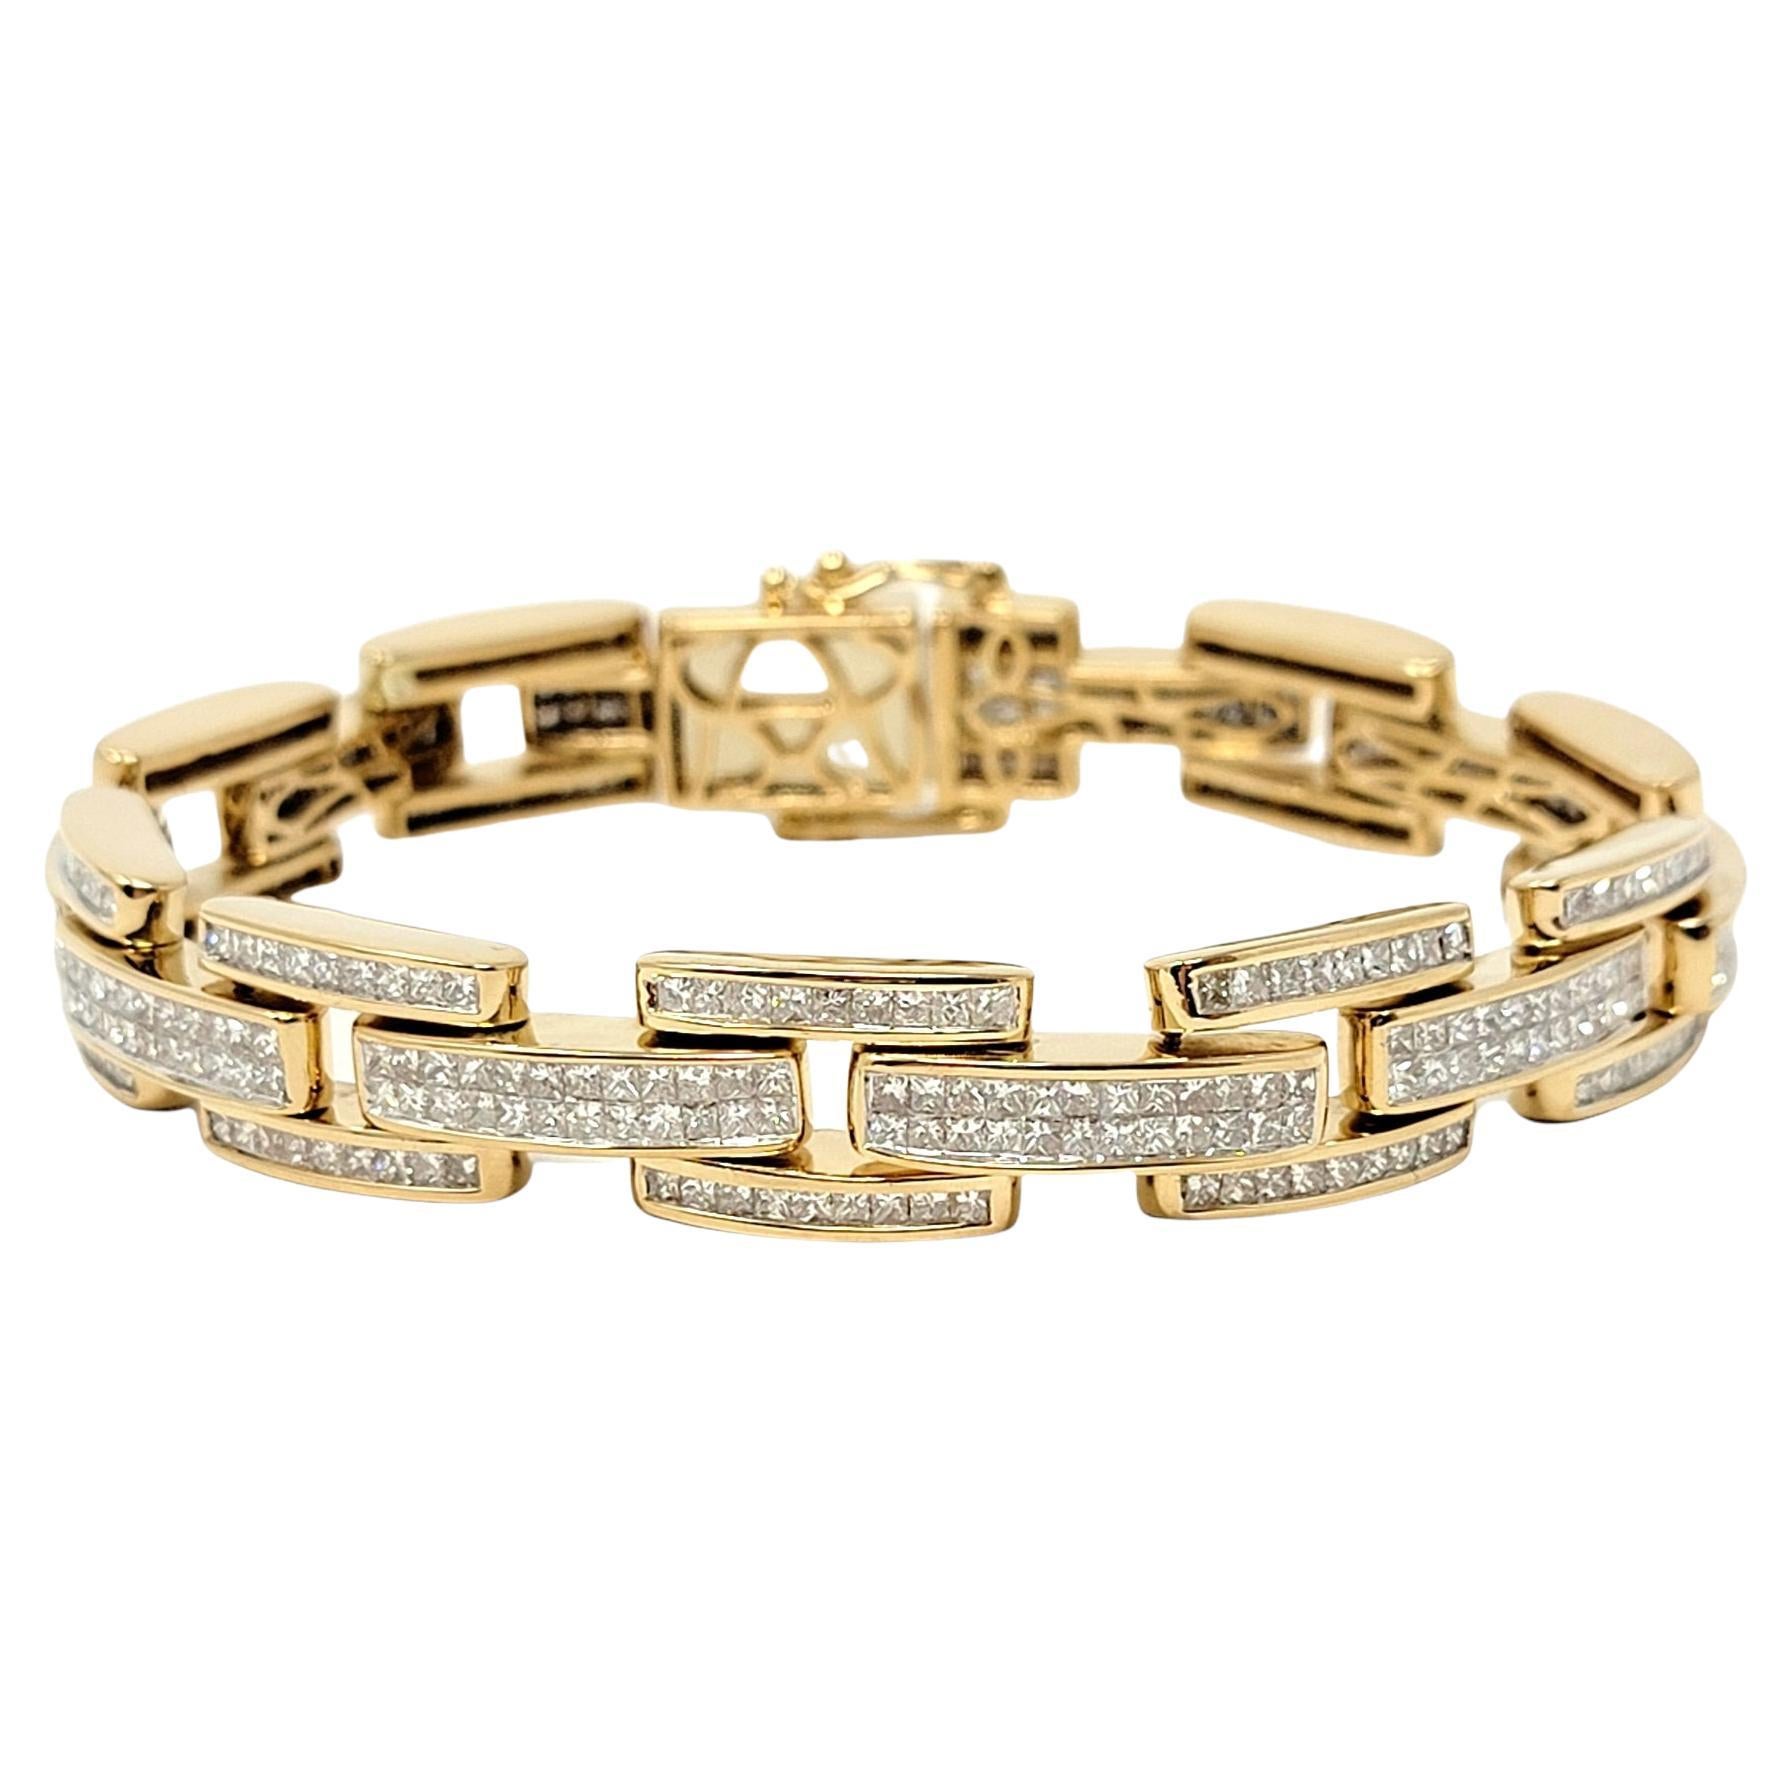 13.10 Carats Total Princess Diamond Panther Link Mens Bracelet in 18 Karat Gold For Sale